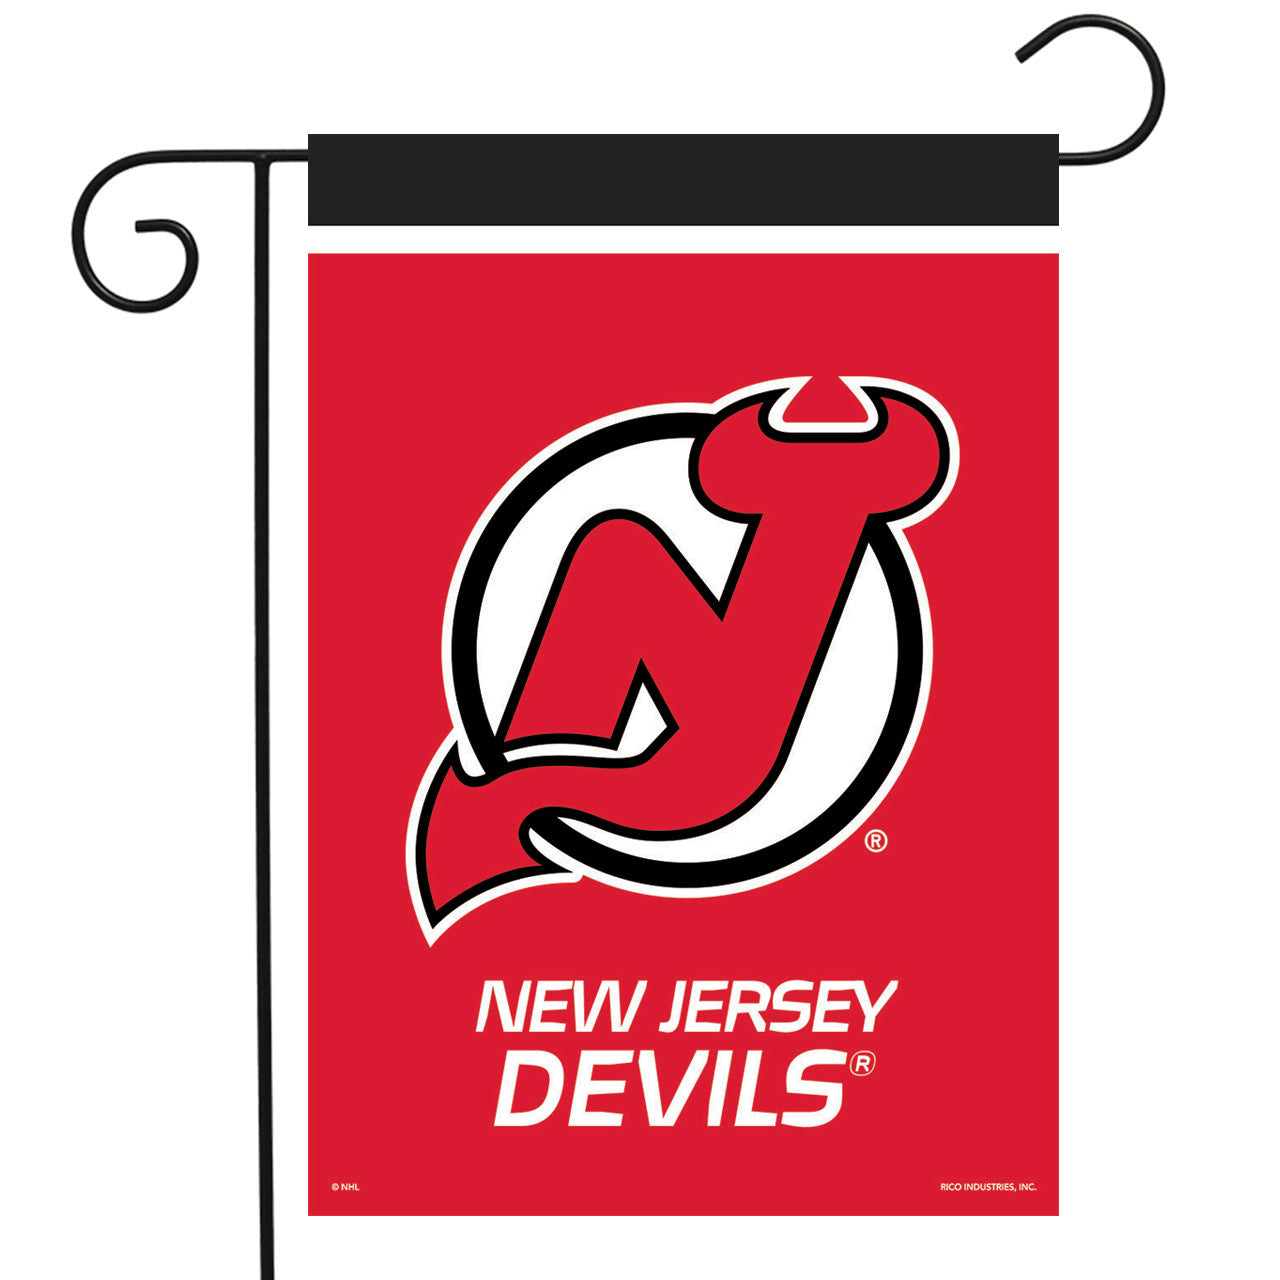 New Jersey Devils 12.5"x18" Team Garden Flag - Dynasty Sports & Framing 